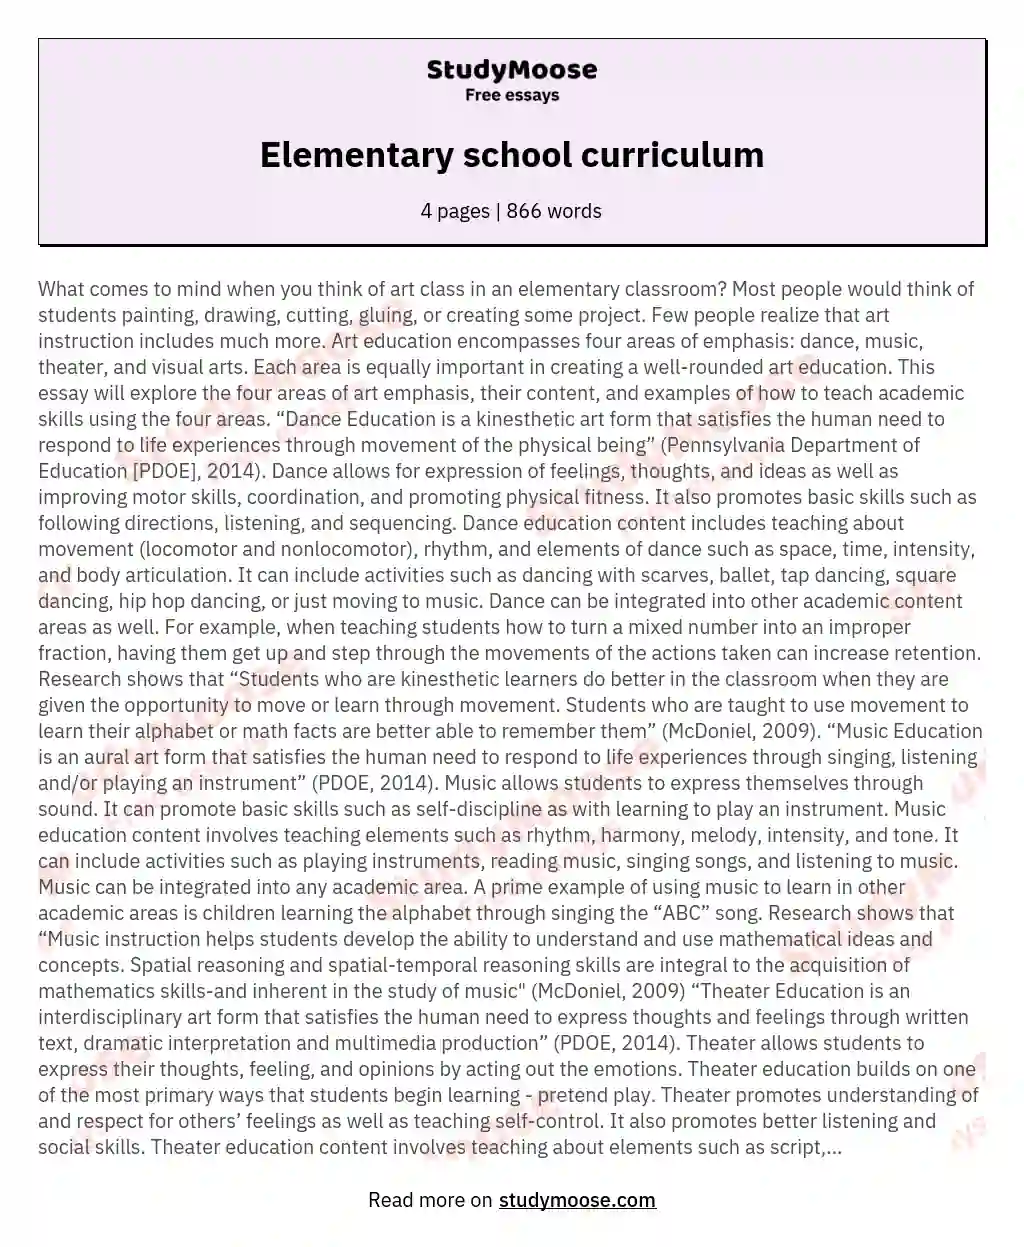 Elementary school curriculum